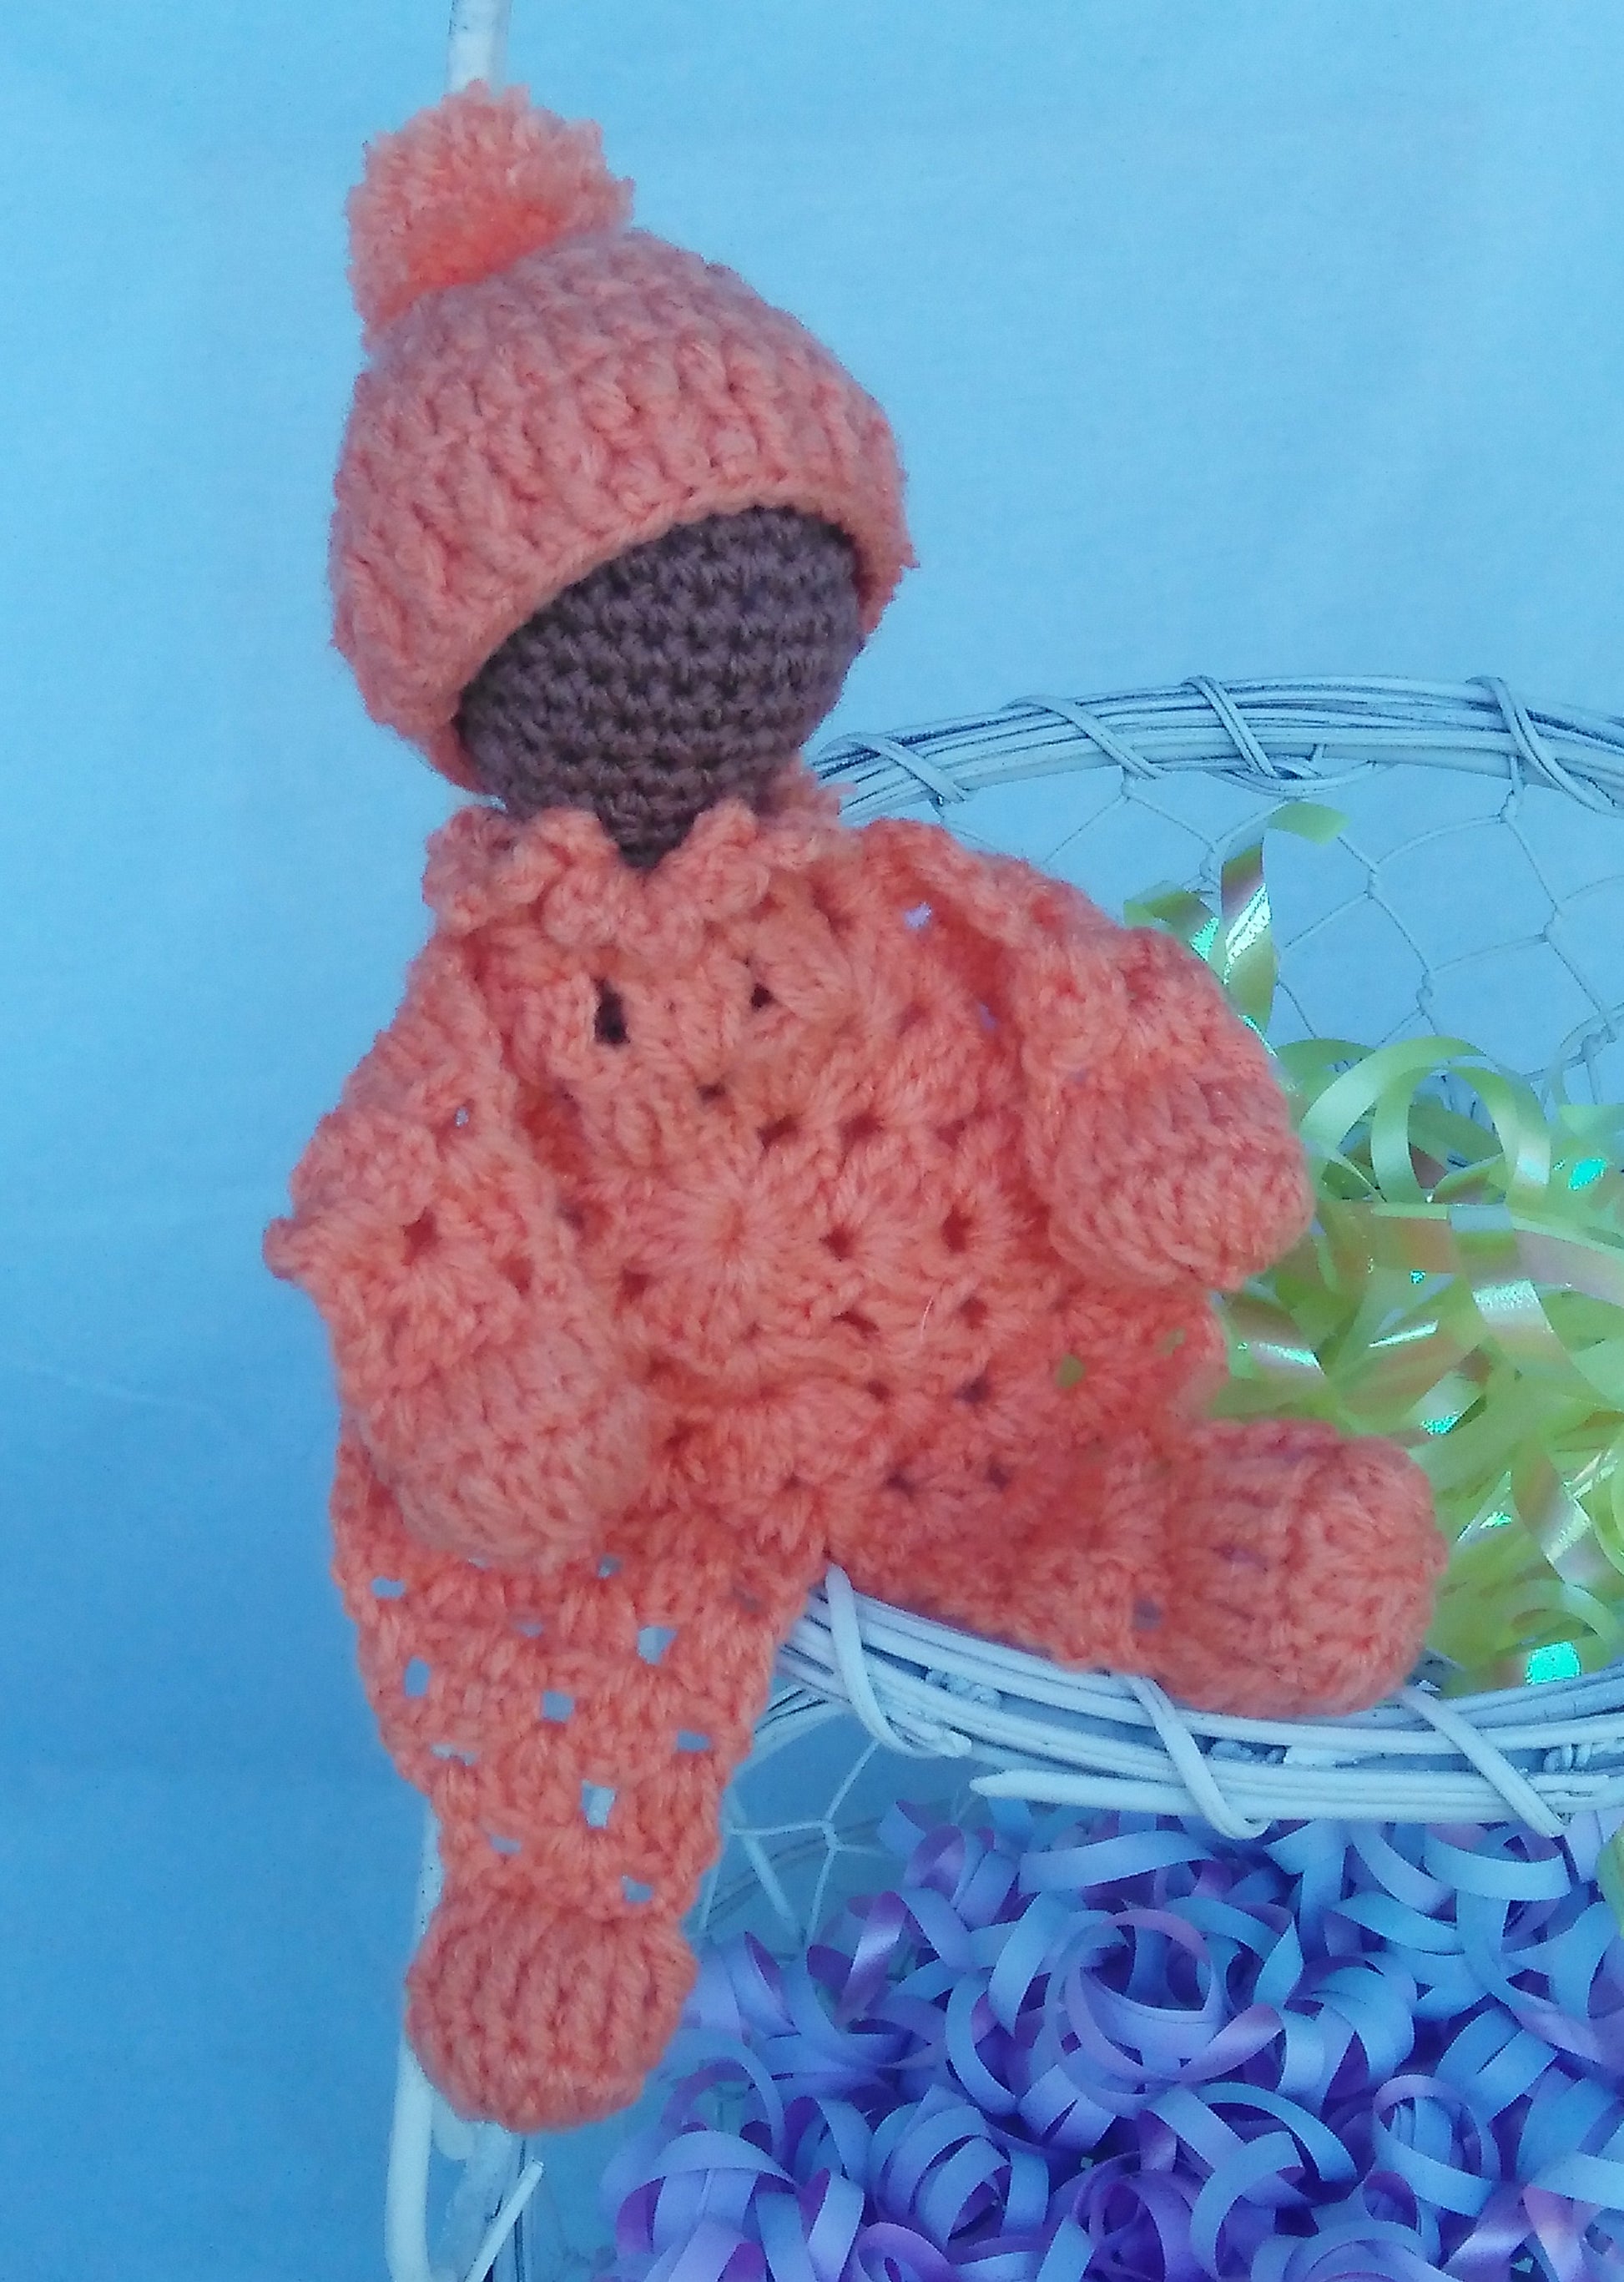  Crochet Doll Pattern, Cuddle baby pattern, Crochet Pattern, Baby Doll, Lovey Crochet, Granny Square Pattern, Star Baby Doll, PDF Download,- Annie Potter's Yarn Basket